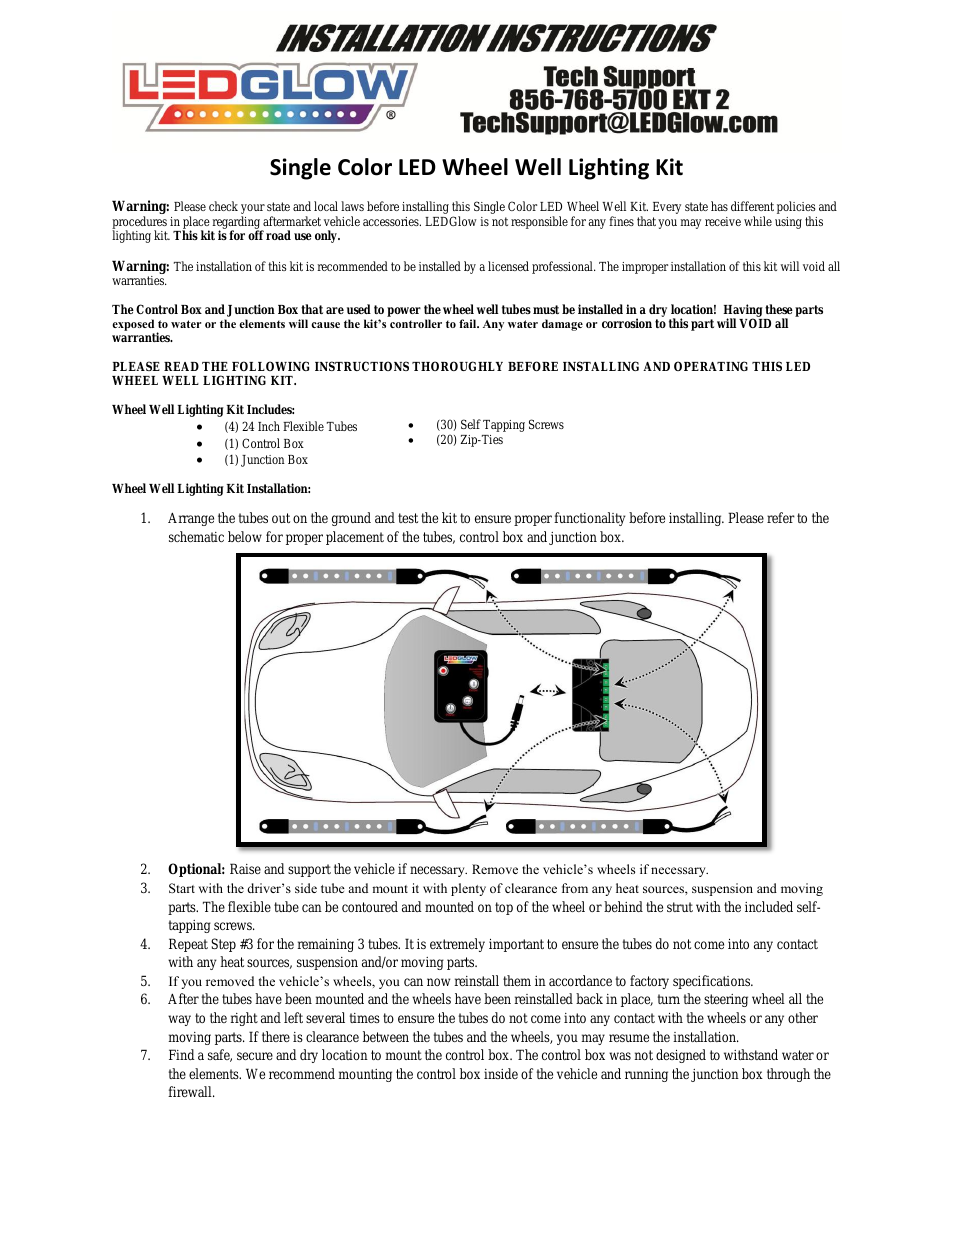 Single Color LED Wheel Well Kit